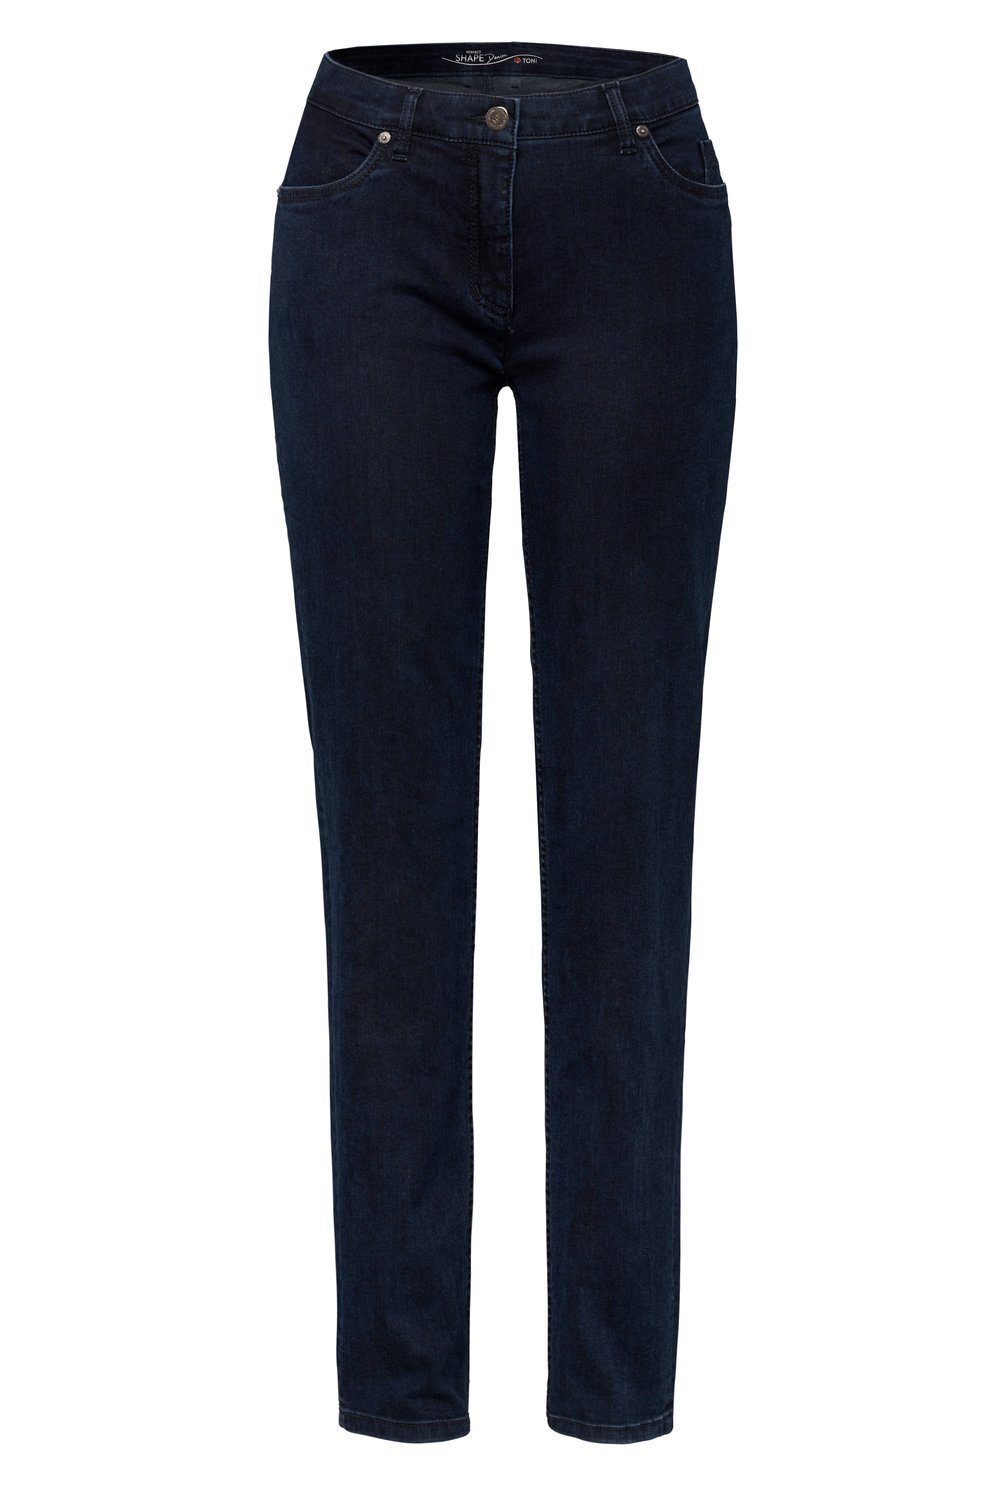 Perfect - Shape Bauch TONI und 5-Pocket-Jeans Shaping-Effekt Po an dunkelblau 059 mit